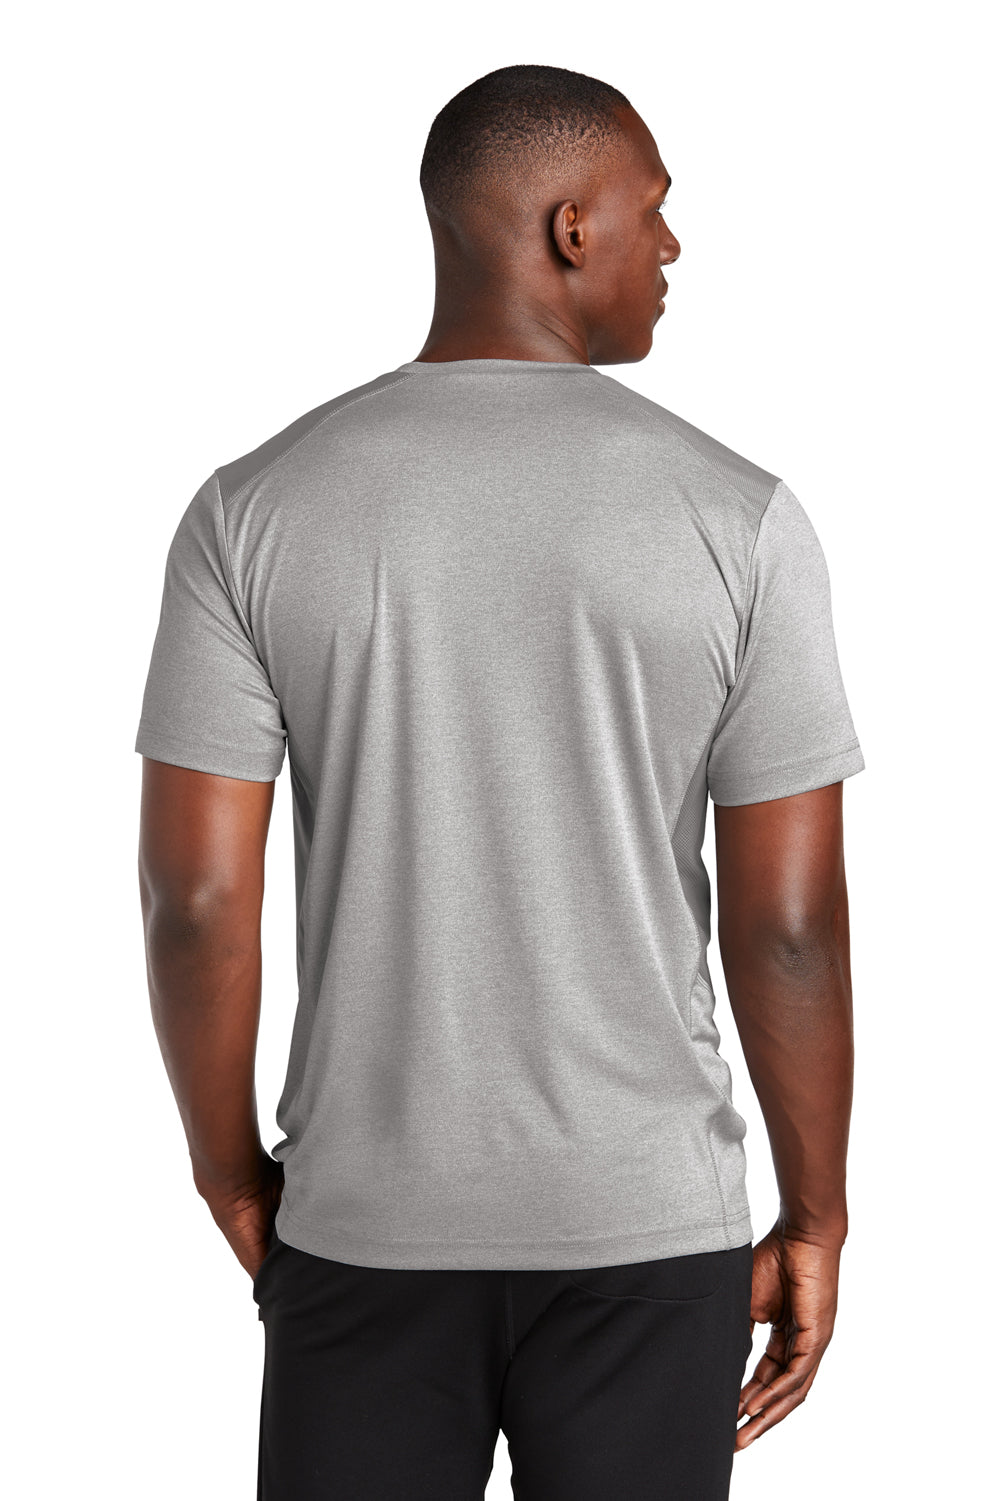 Sport-Tek Mens Endeavor Short Sleeve Crewneck T-Shirt Heather Light Grey/Light Grey Side